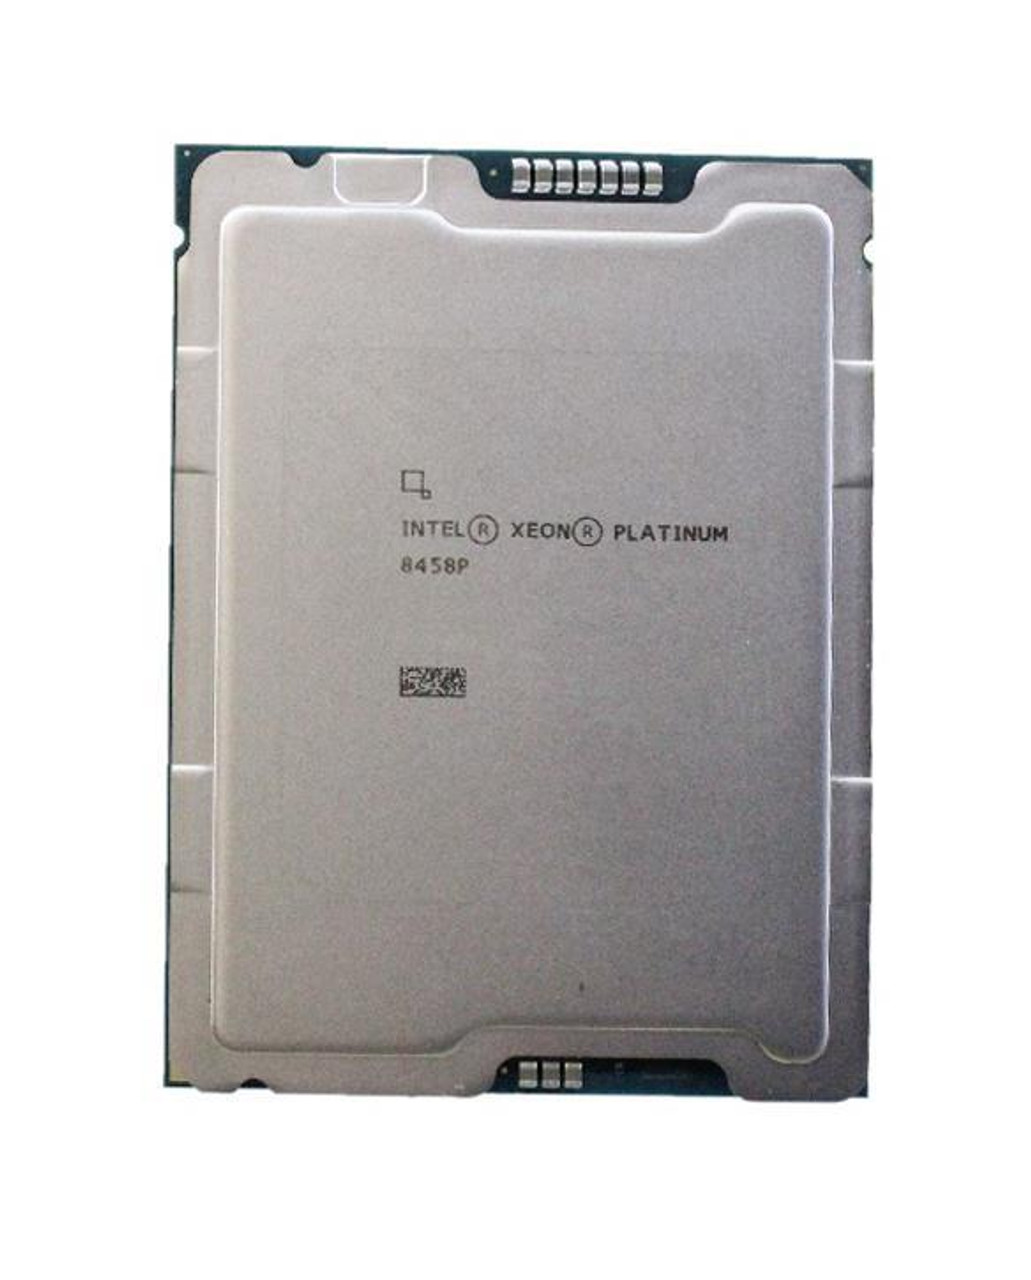 HPE 2.70GHz 16GT/s UPI 82.5MB L3 Cache Socket FCLGA4677 Intel Xeon Platinum 8458P 44-Core Server Processor Upgrade